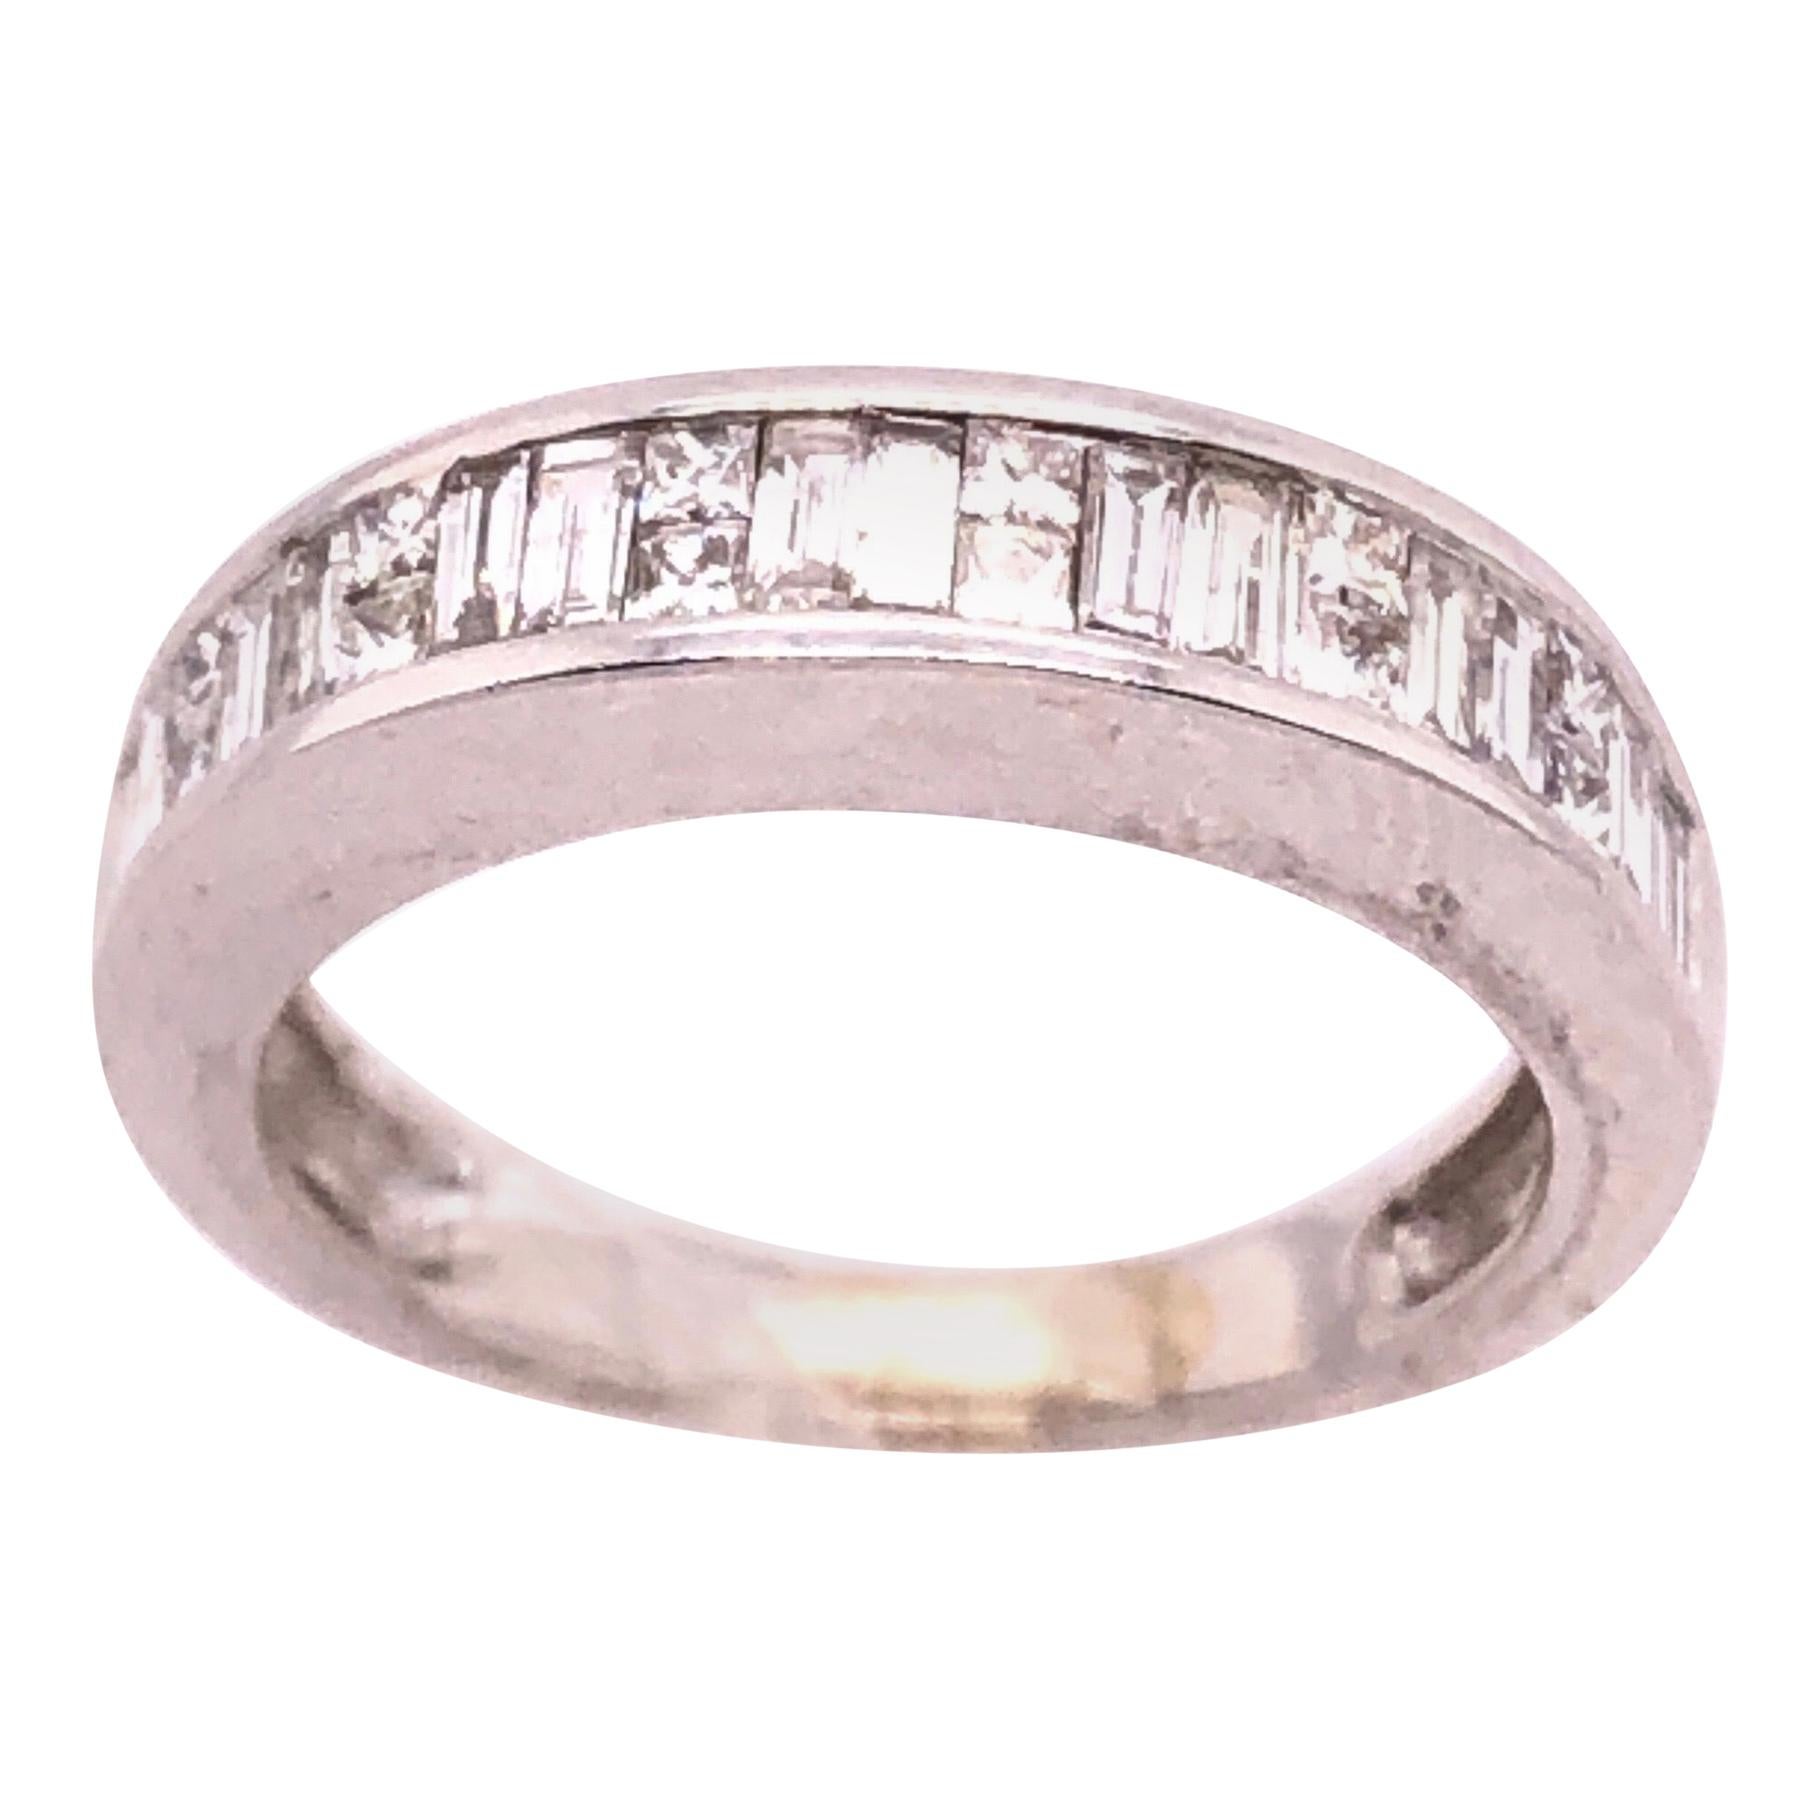 14 Karat White Gold and Diamond Bridal Ring 1.25 Total Diamond Weight